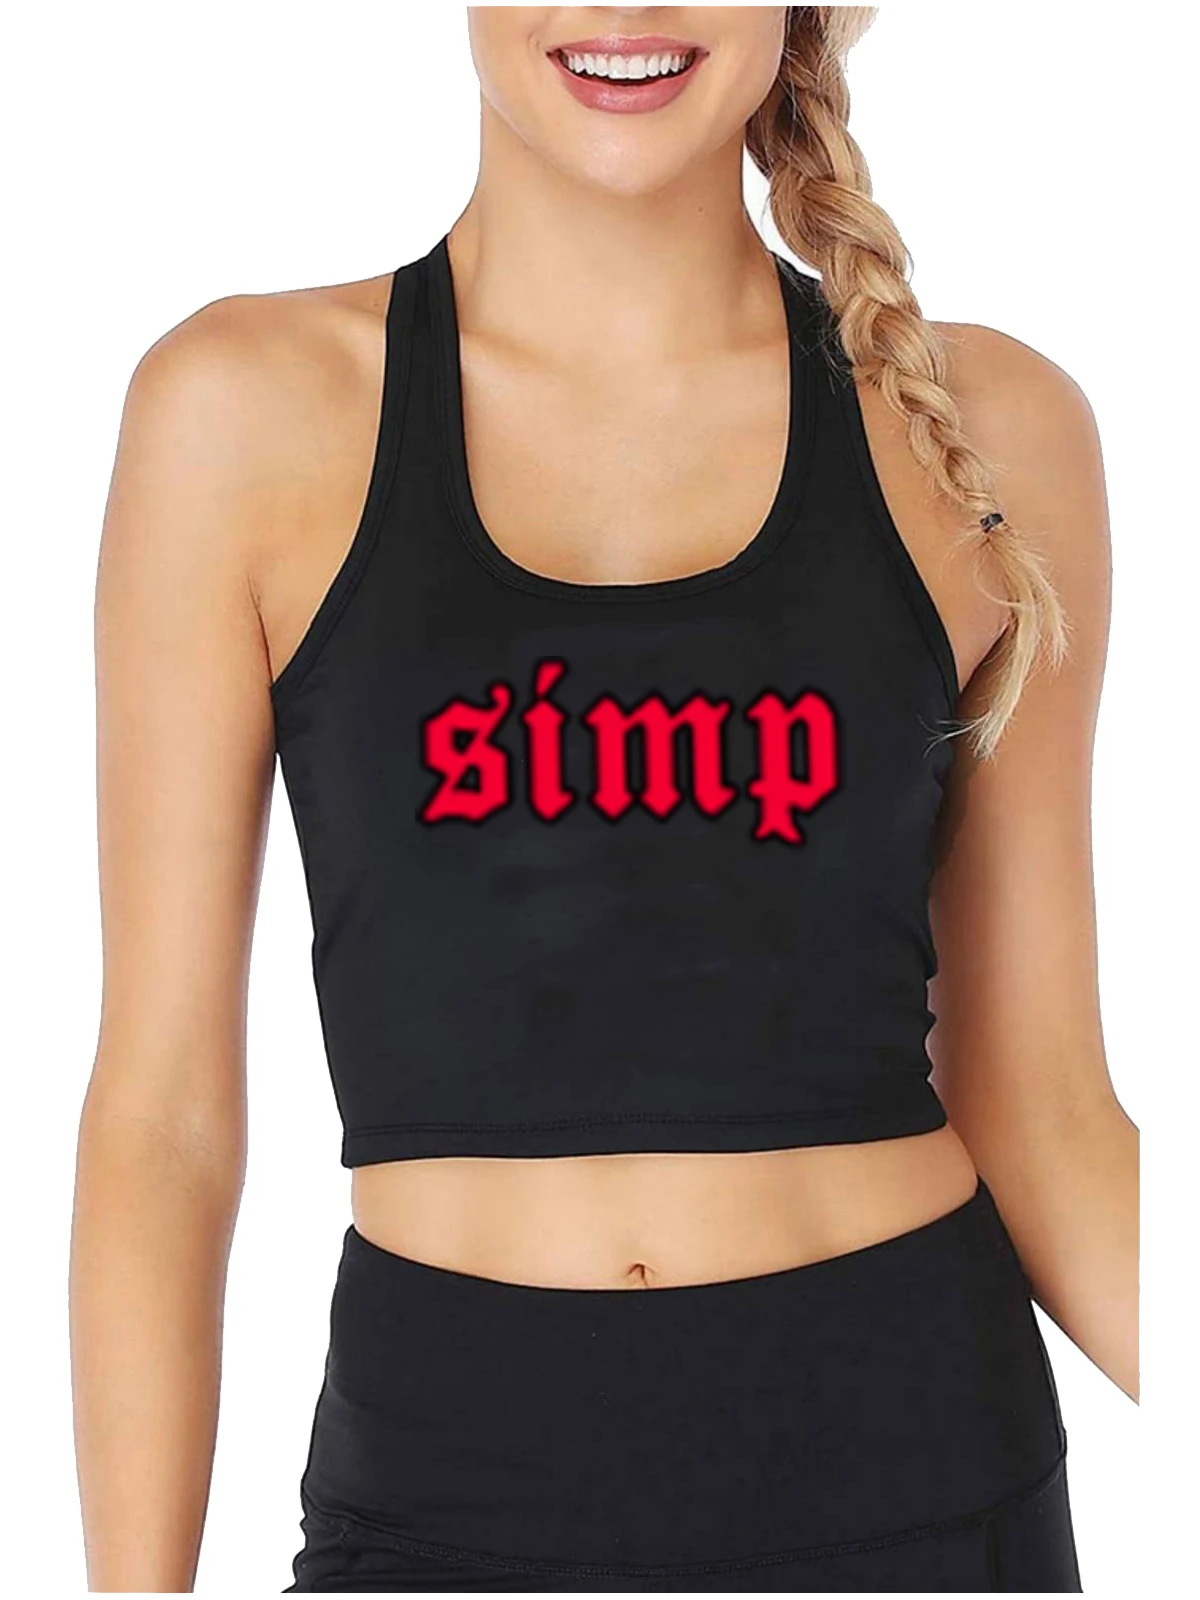 

Simp Grunge Aesthetic Red Goth Eboy Egirl Gift Crop Top Women's Cotton Sexy Slim Fit Tank Tops Summer Sports Camisole